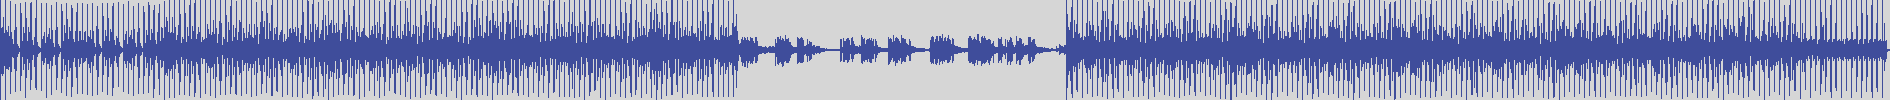 atomic_recordings [AR006] Teddy Tyrrell - Ravis [House Mix] audio wave form